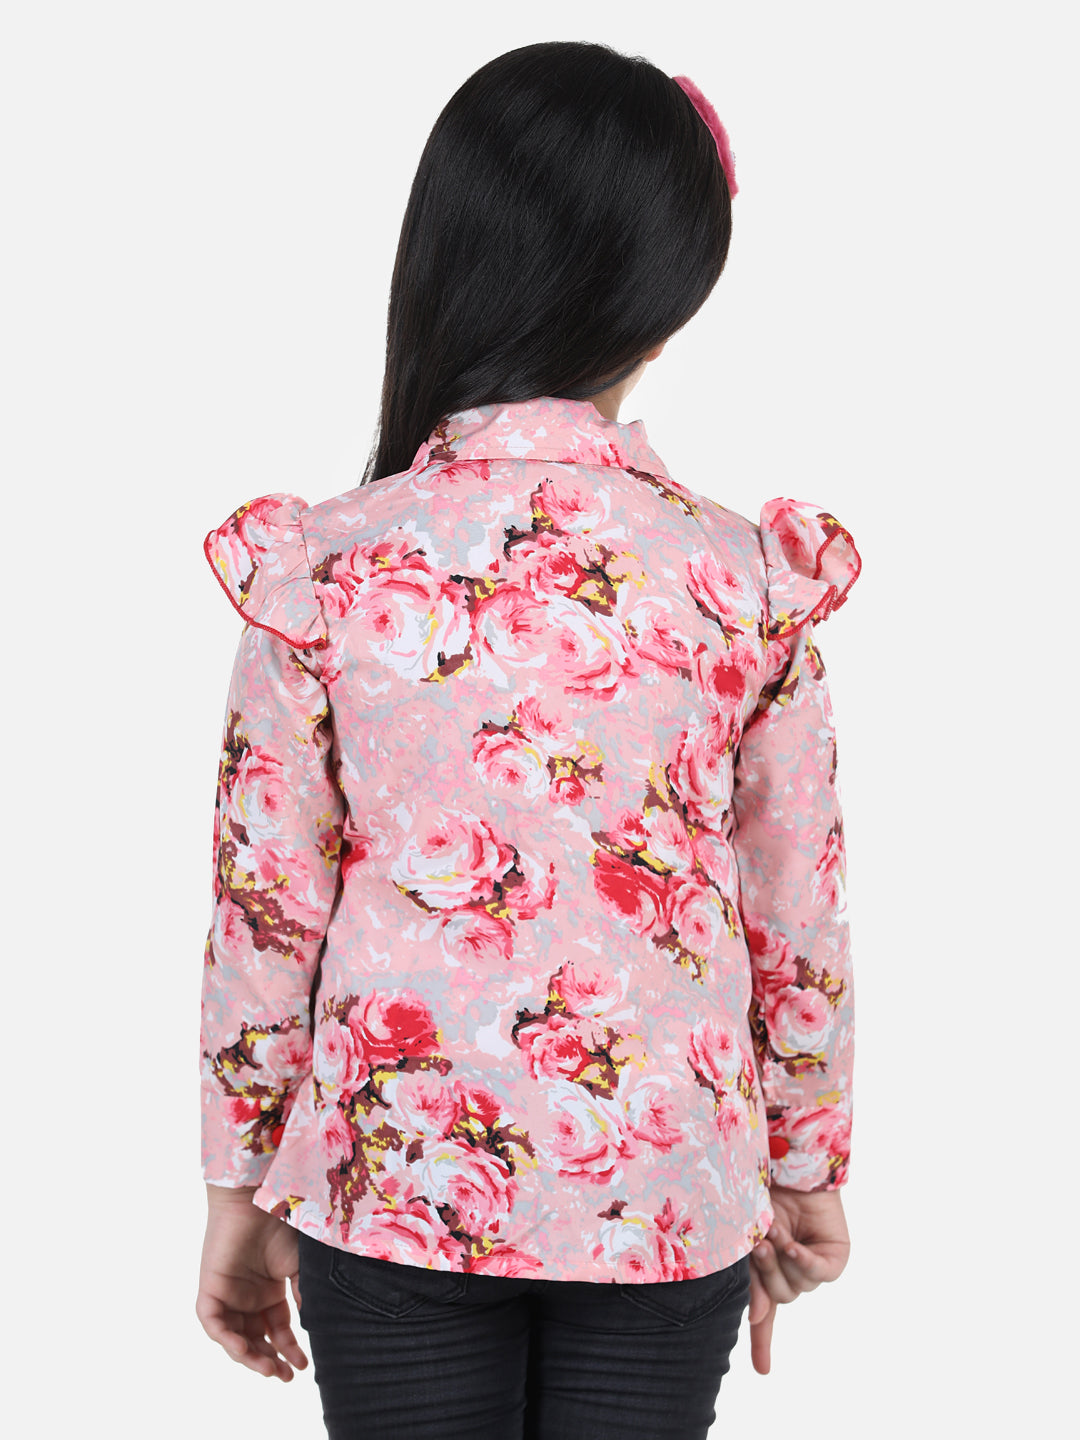 Cutiekins Girls Casual Polyester Shirt Style Top  (Multicolor,)